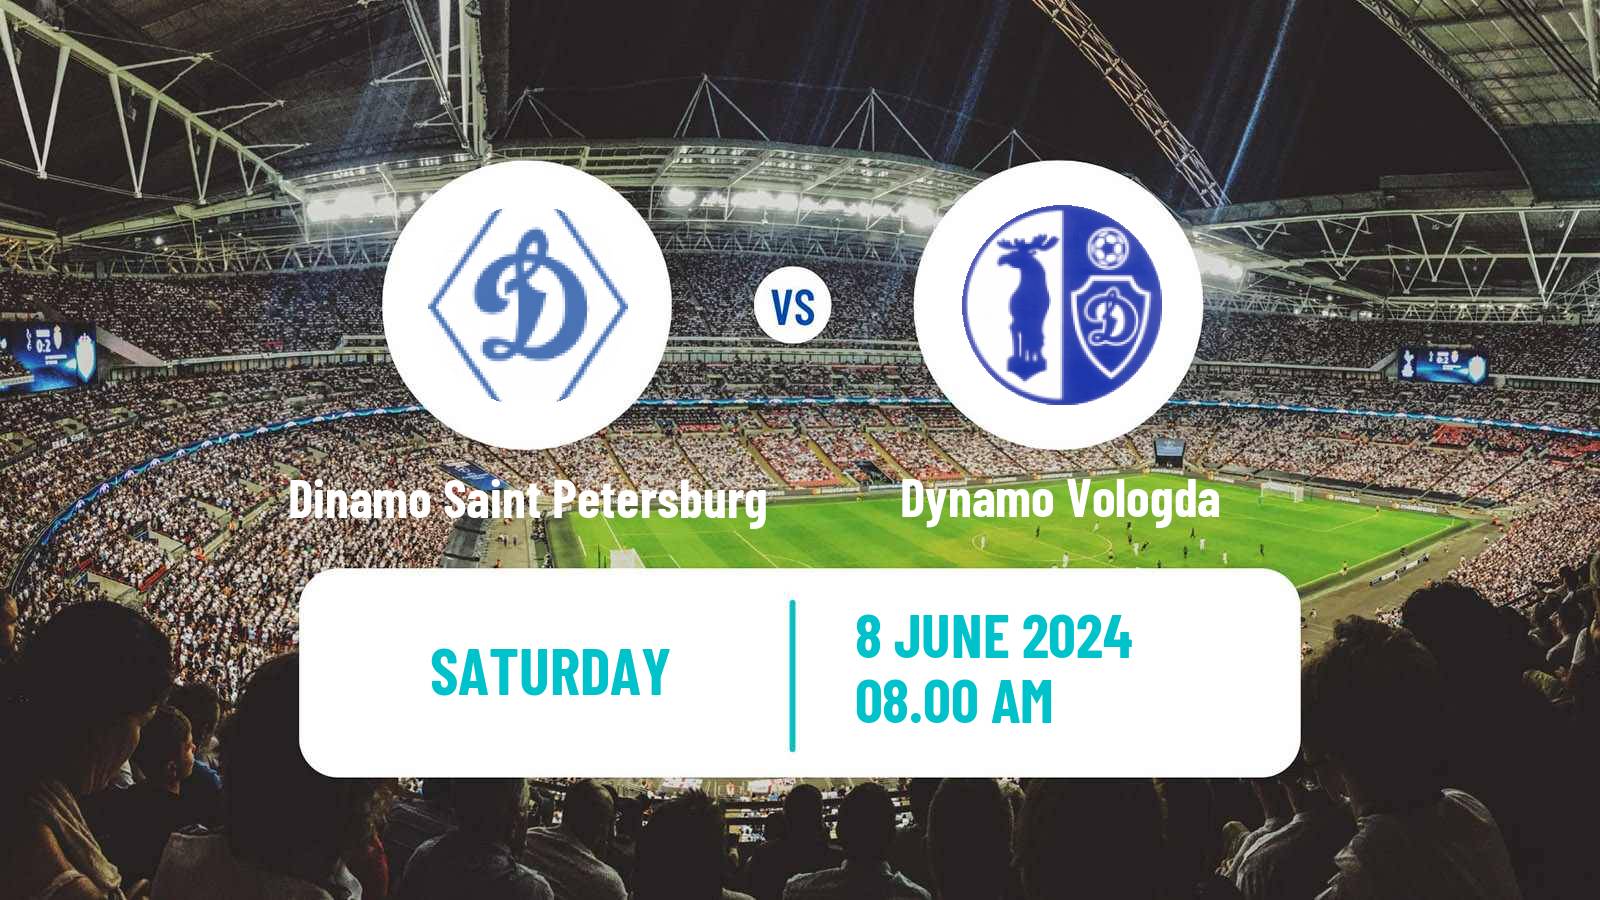 Soccer FNL 2 Division B Group 2 Dinamo Saint Petersburg - Dynamo Vologda